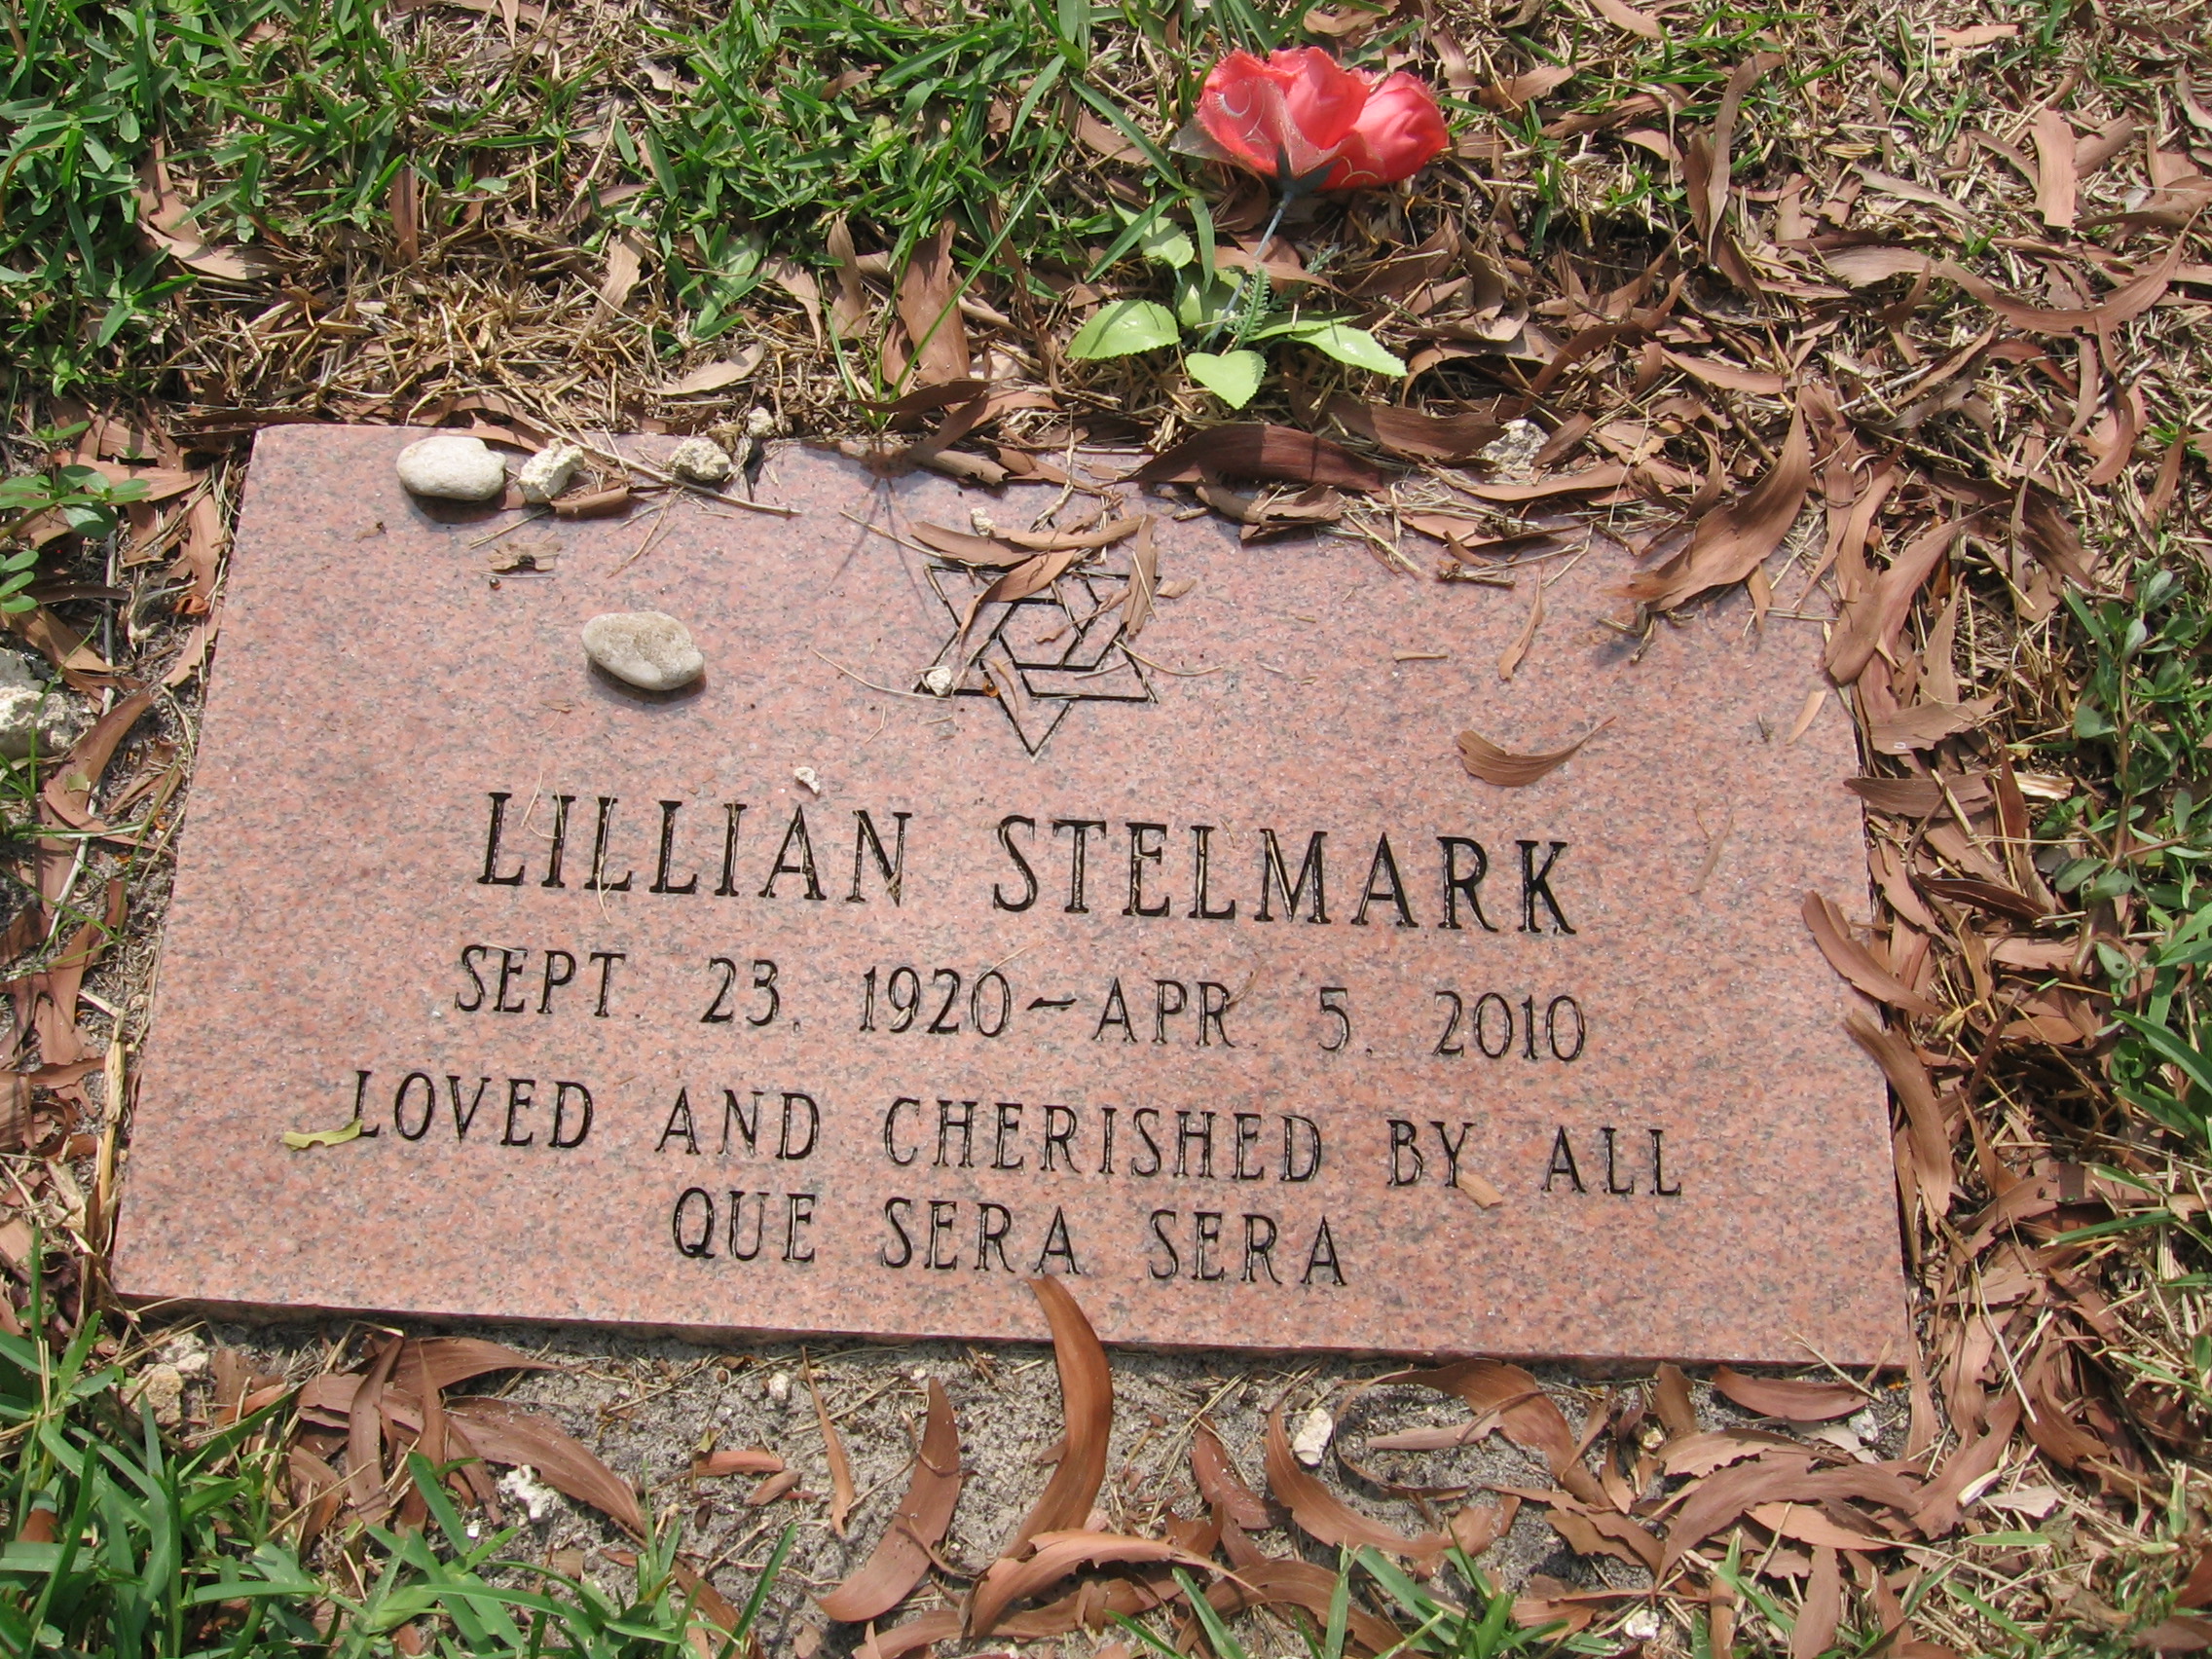 Lillian Stelmark